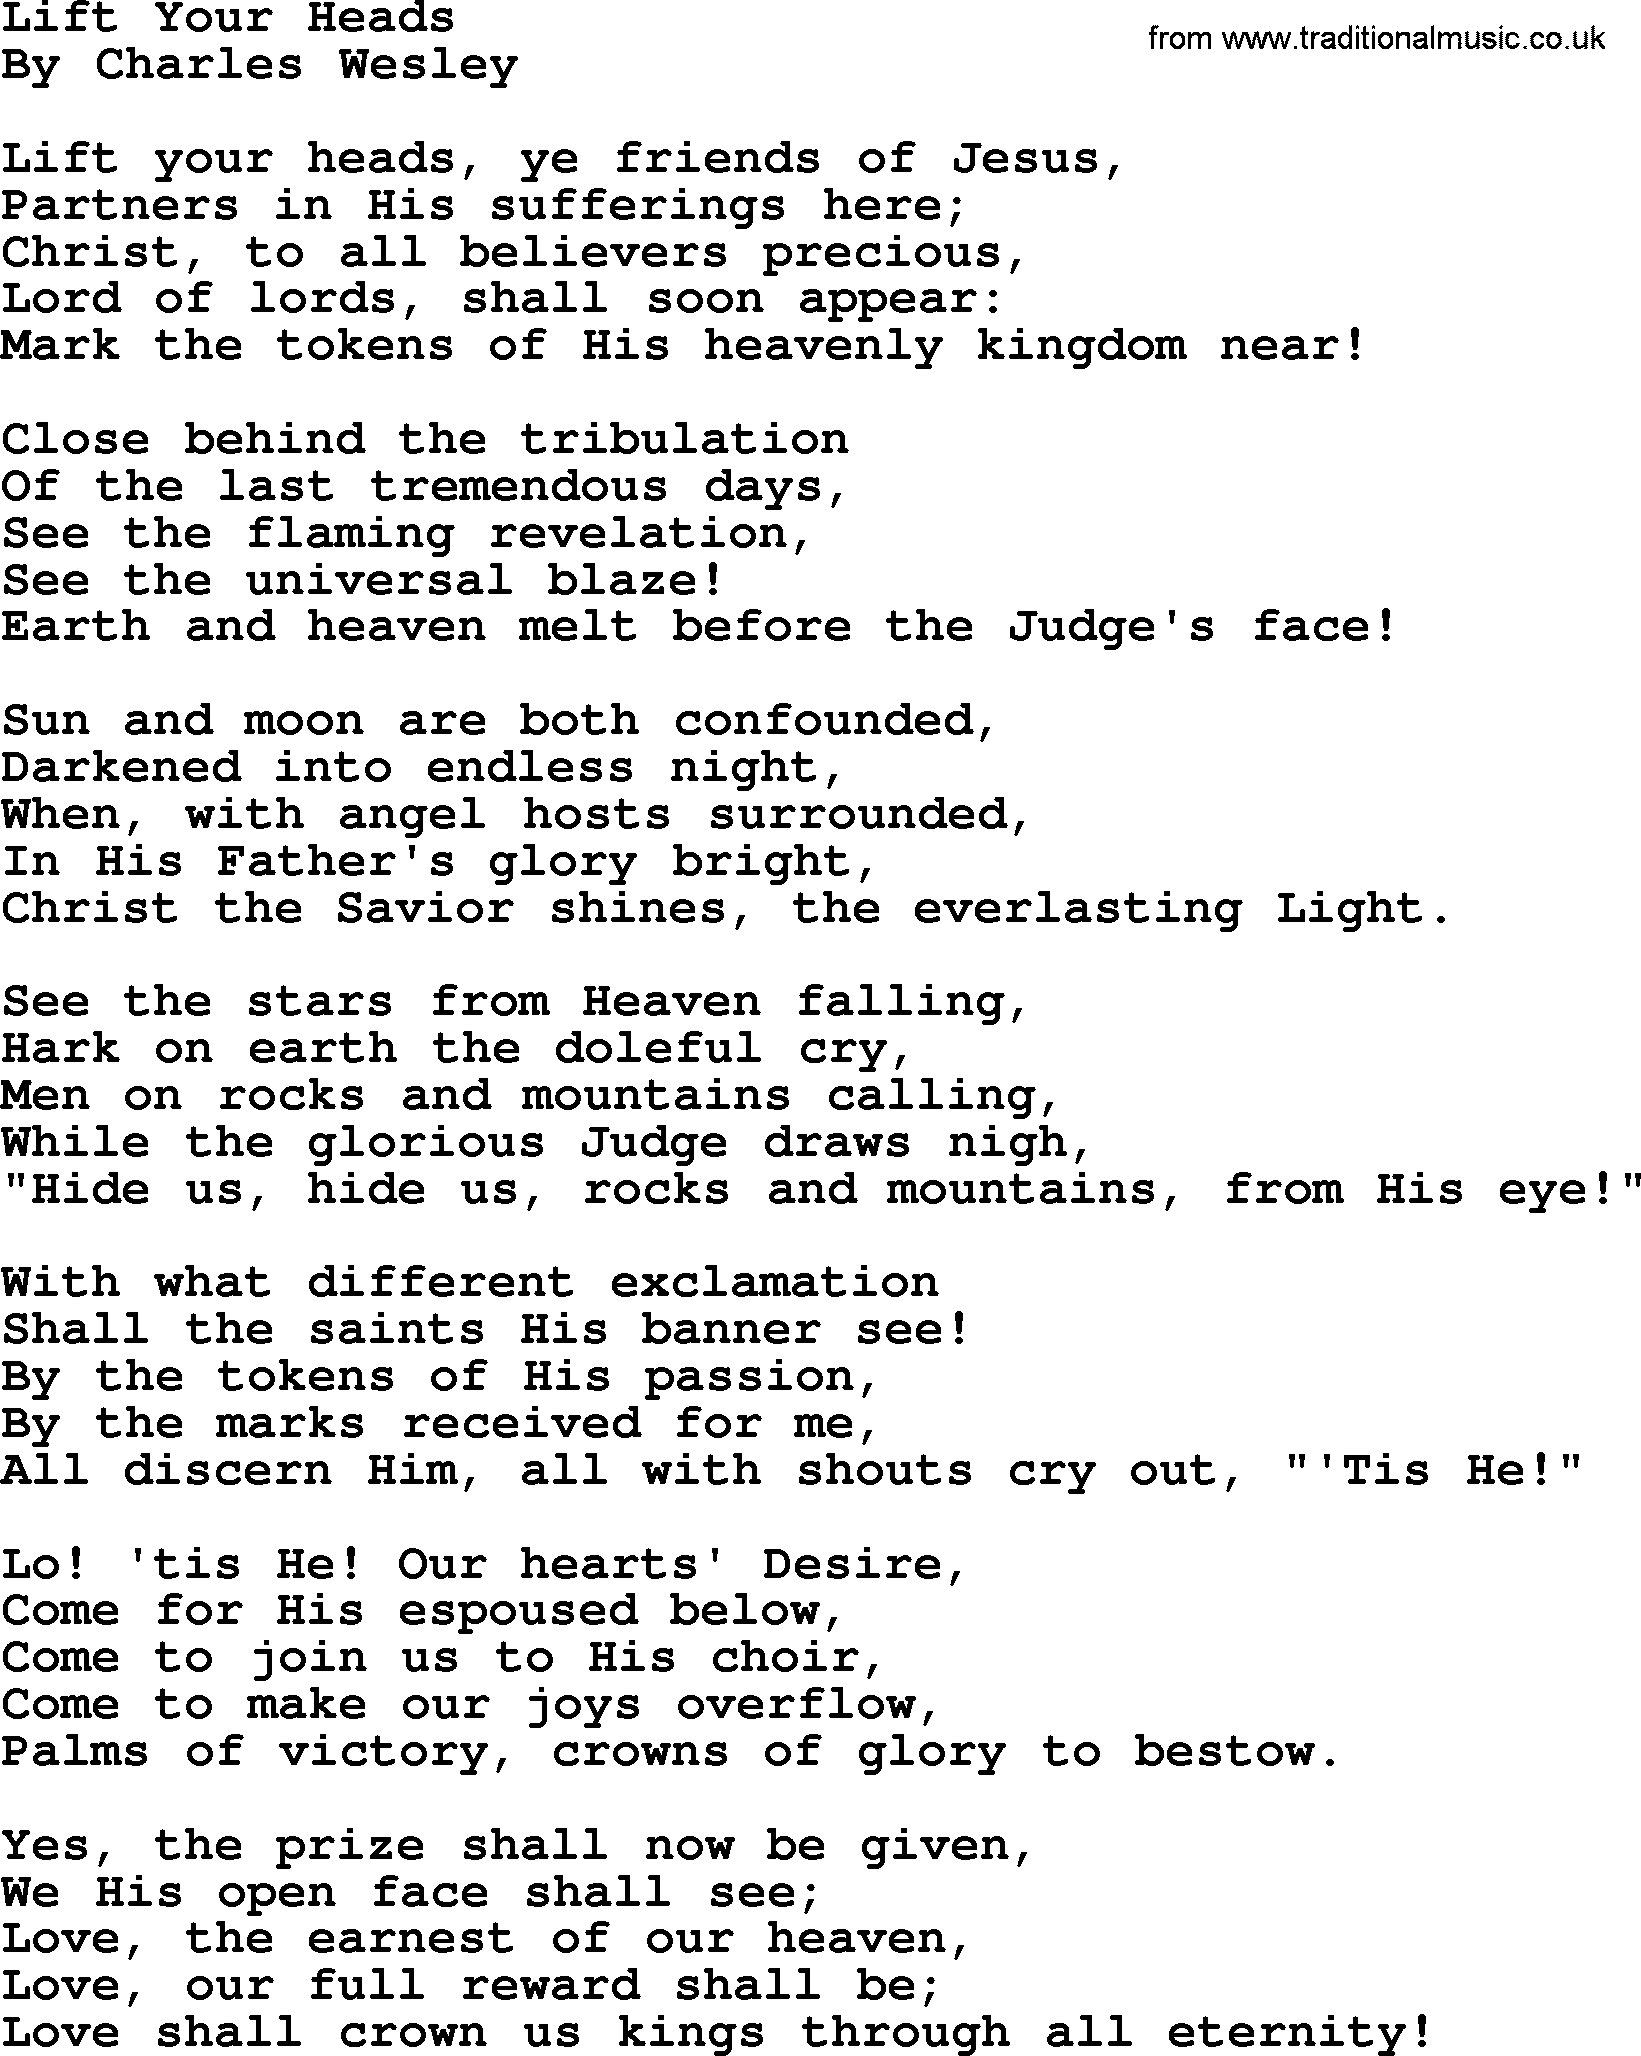 Charles Wesley hymn: Lift Your Heads, lyrics